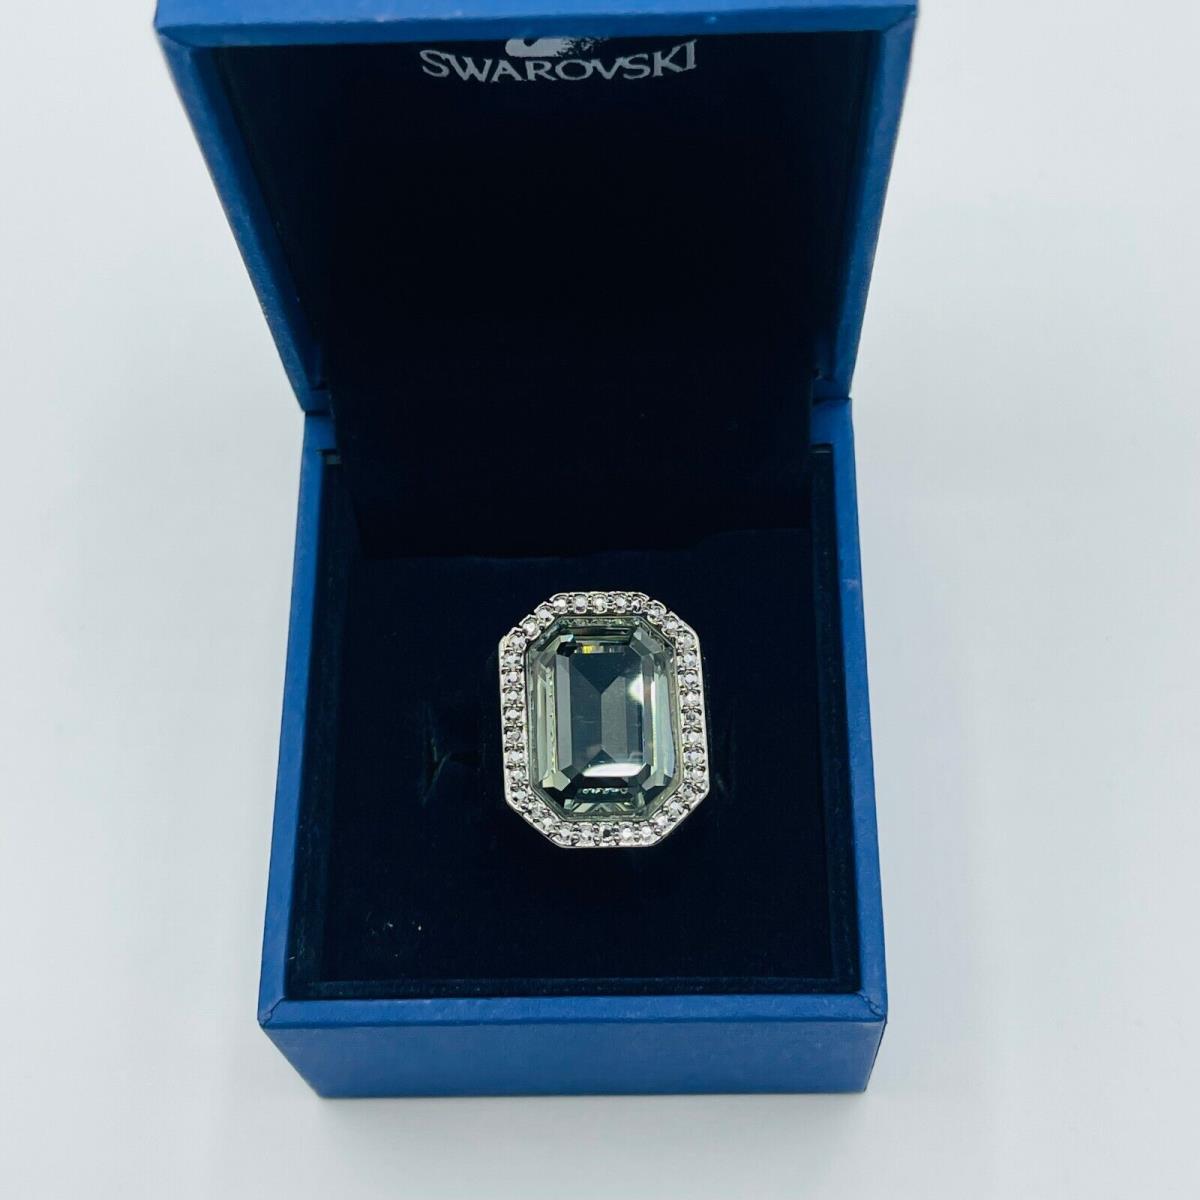 Swarovski Meteor Vintage-inspired Black Diamond Studded Ring